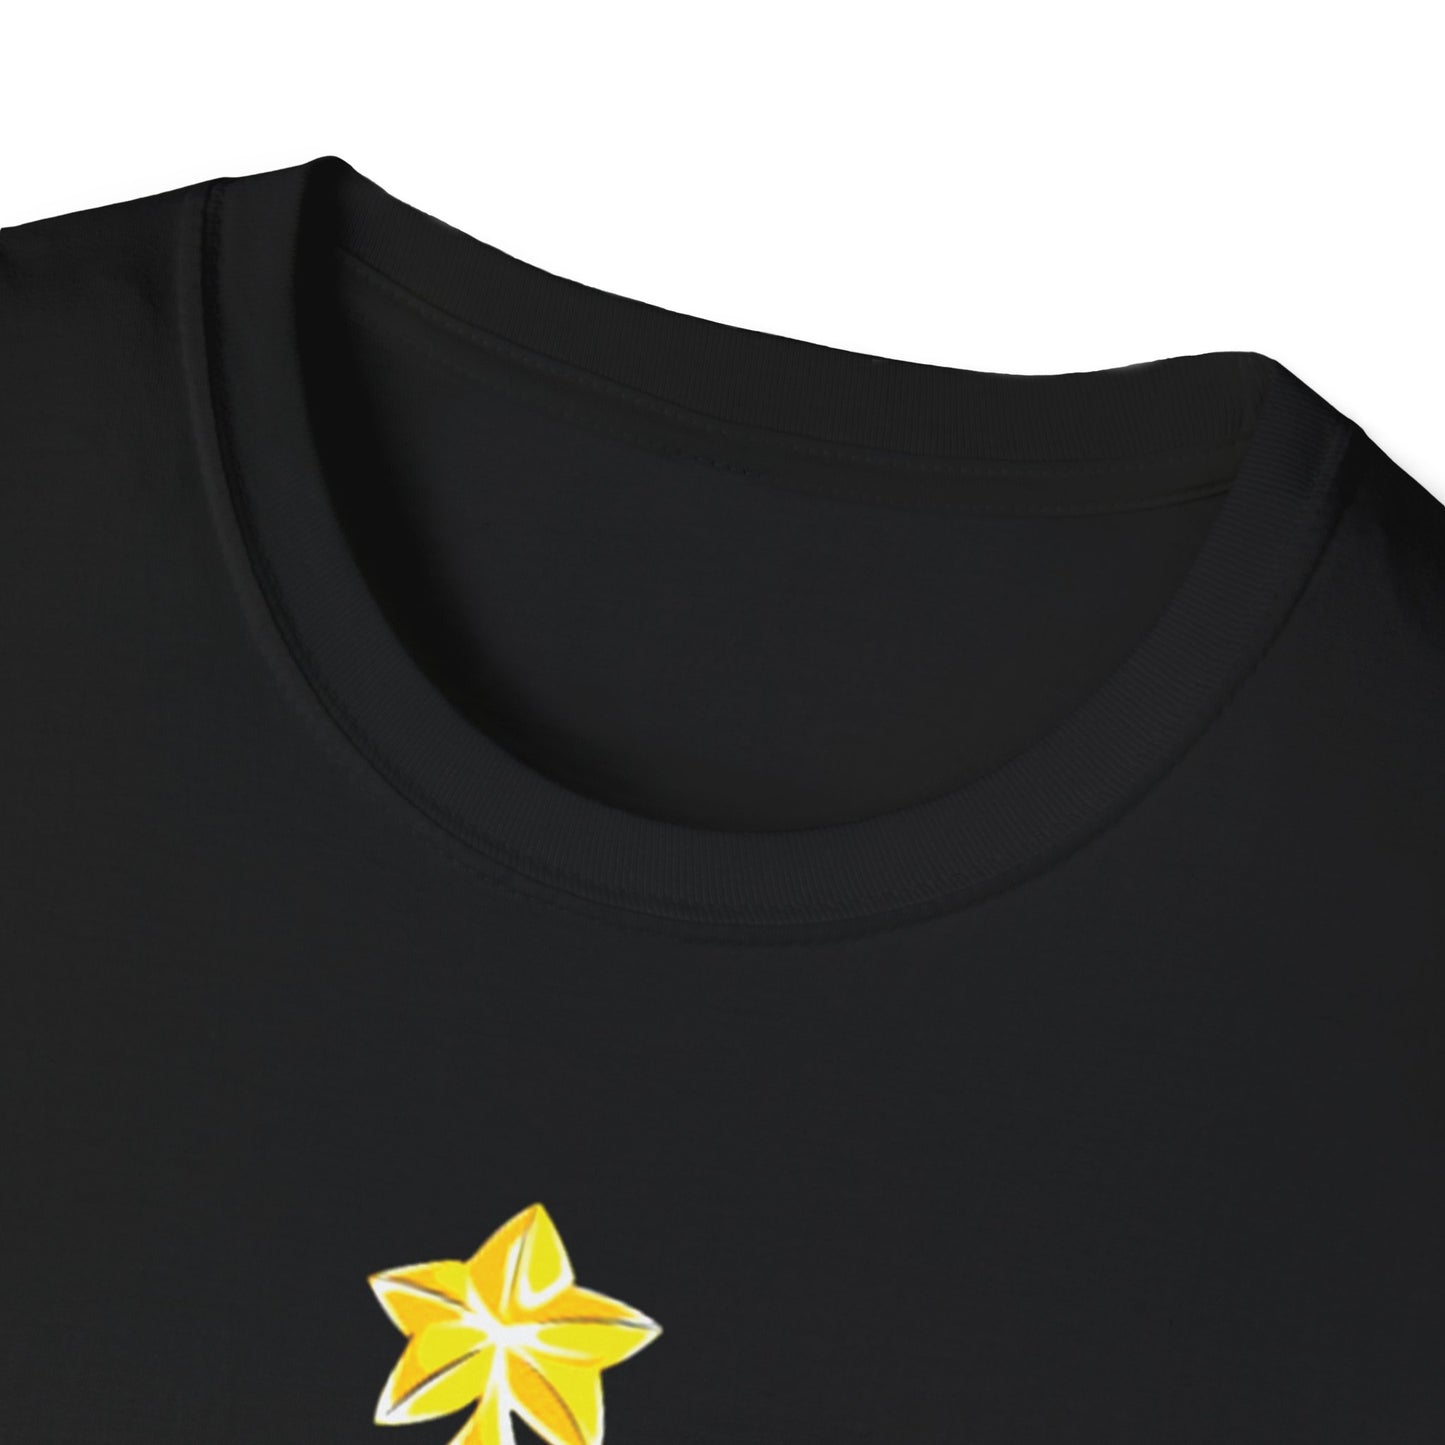 Star doggy cartoonic tree Unisex Softstyle T-Shirt